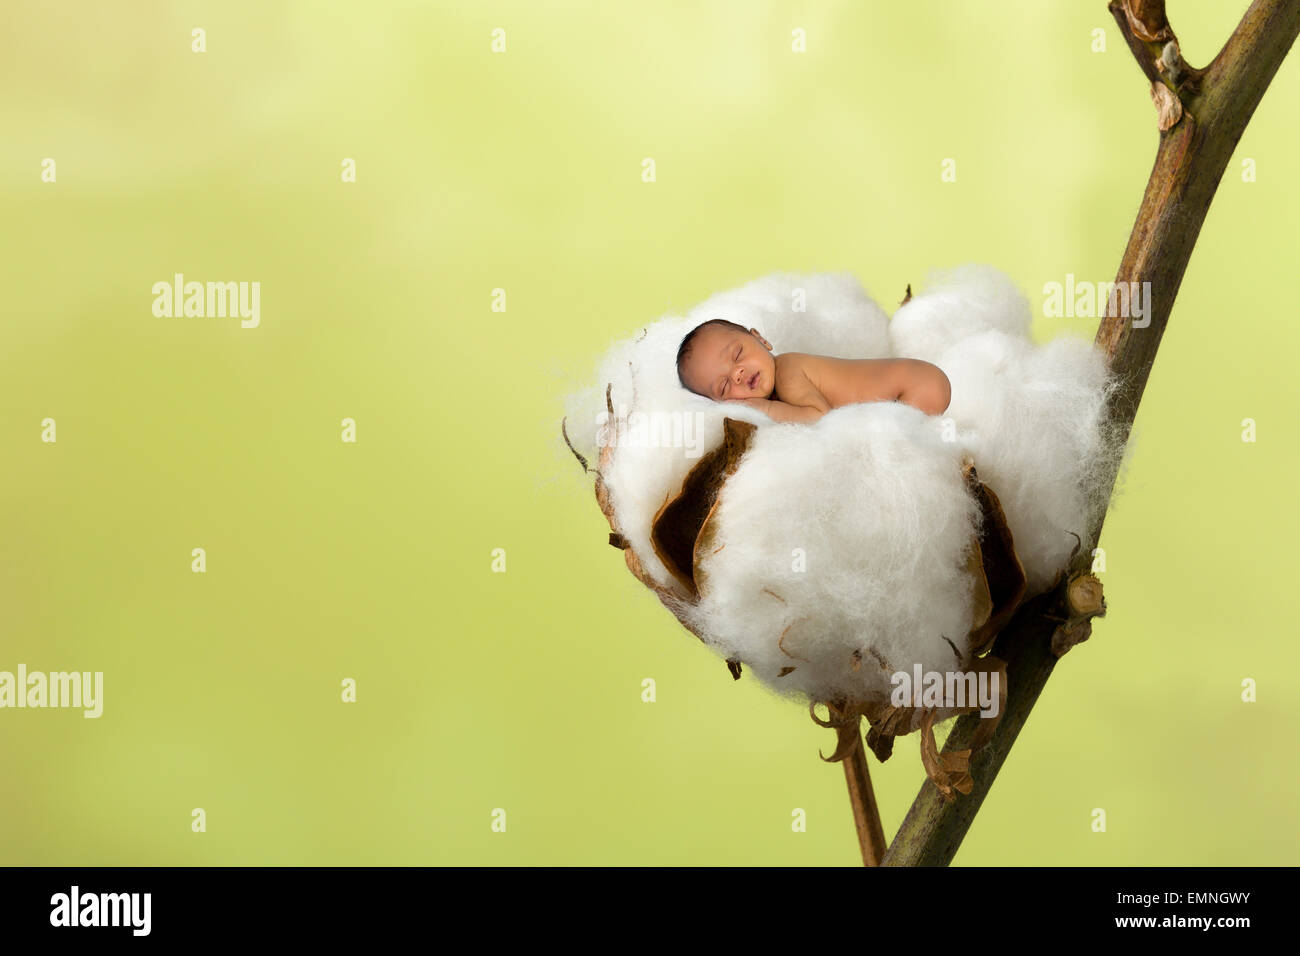 Little sleeping newborn baby photoshopped into a soft cotton ball Stock Photo